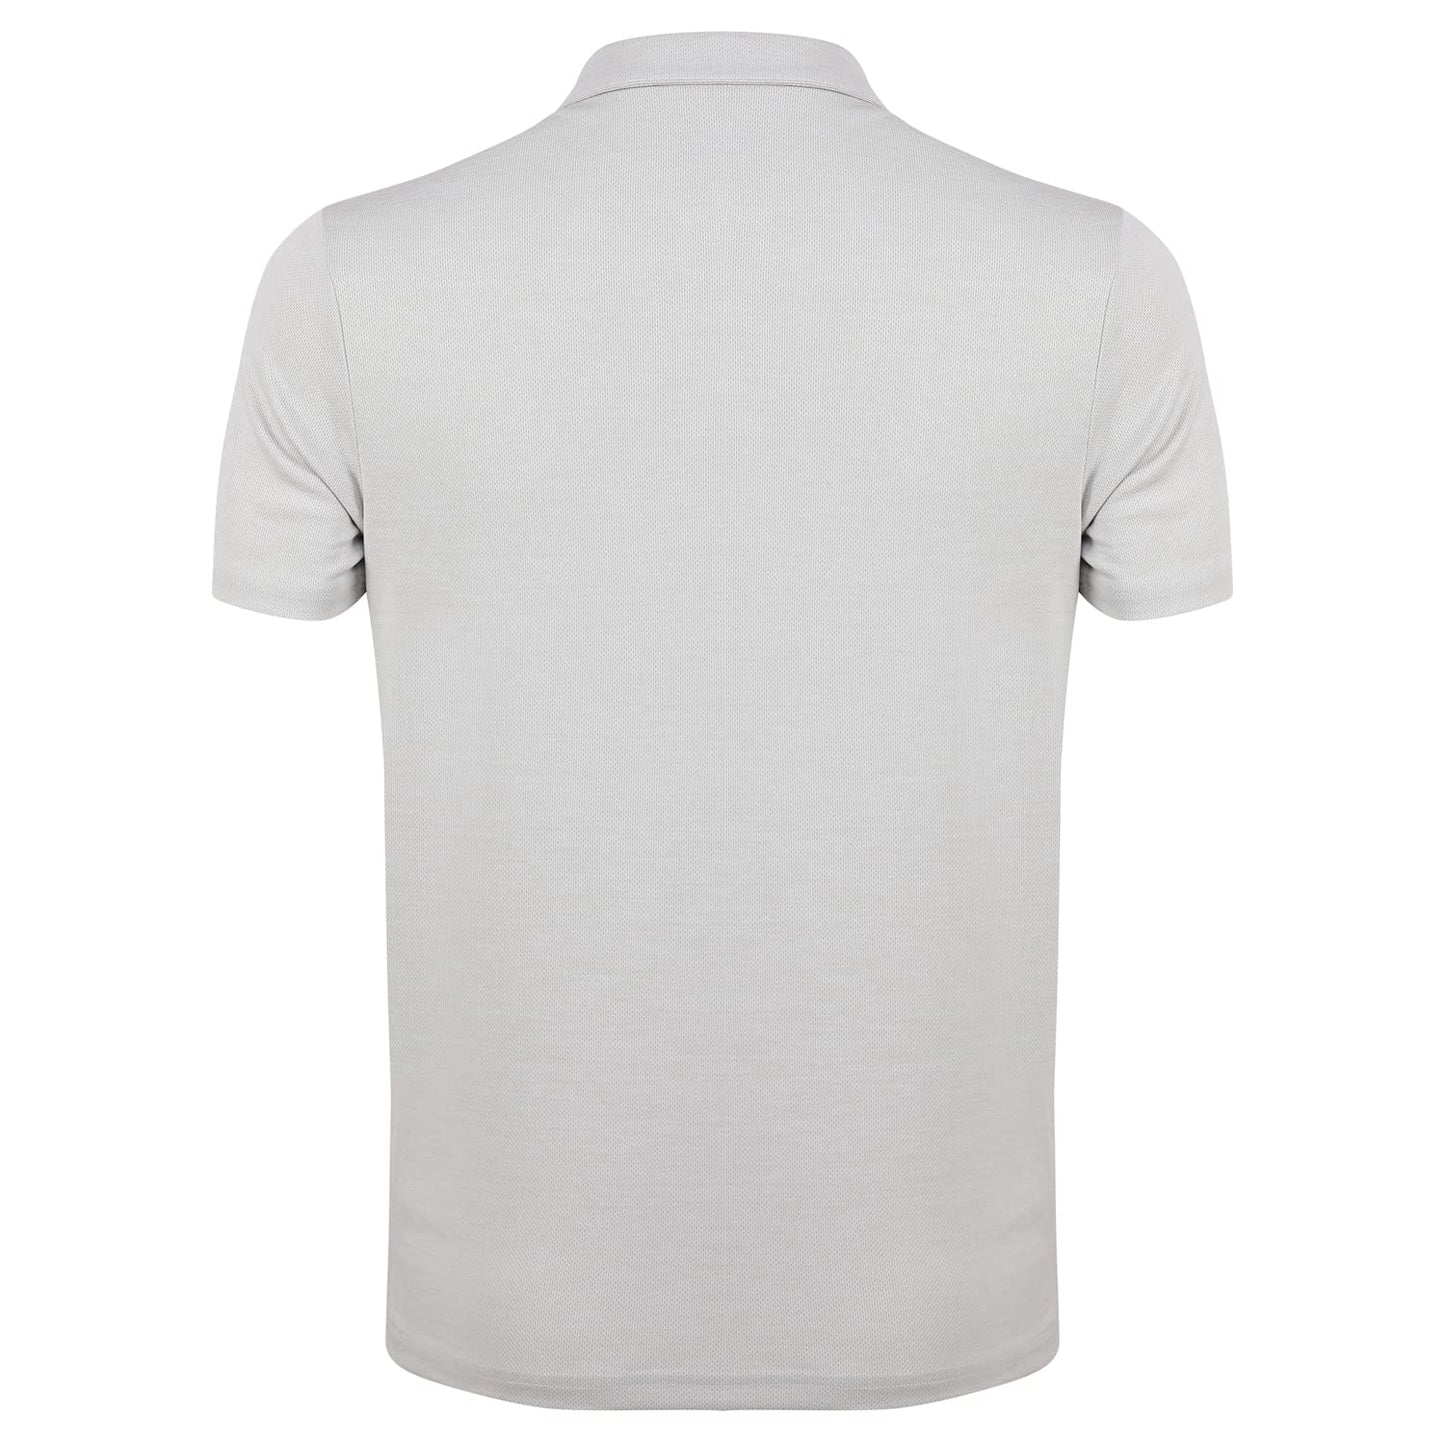 Yonex Polo Badminton T Shirt - White - Best Price online Prokicksports.com